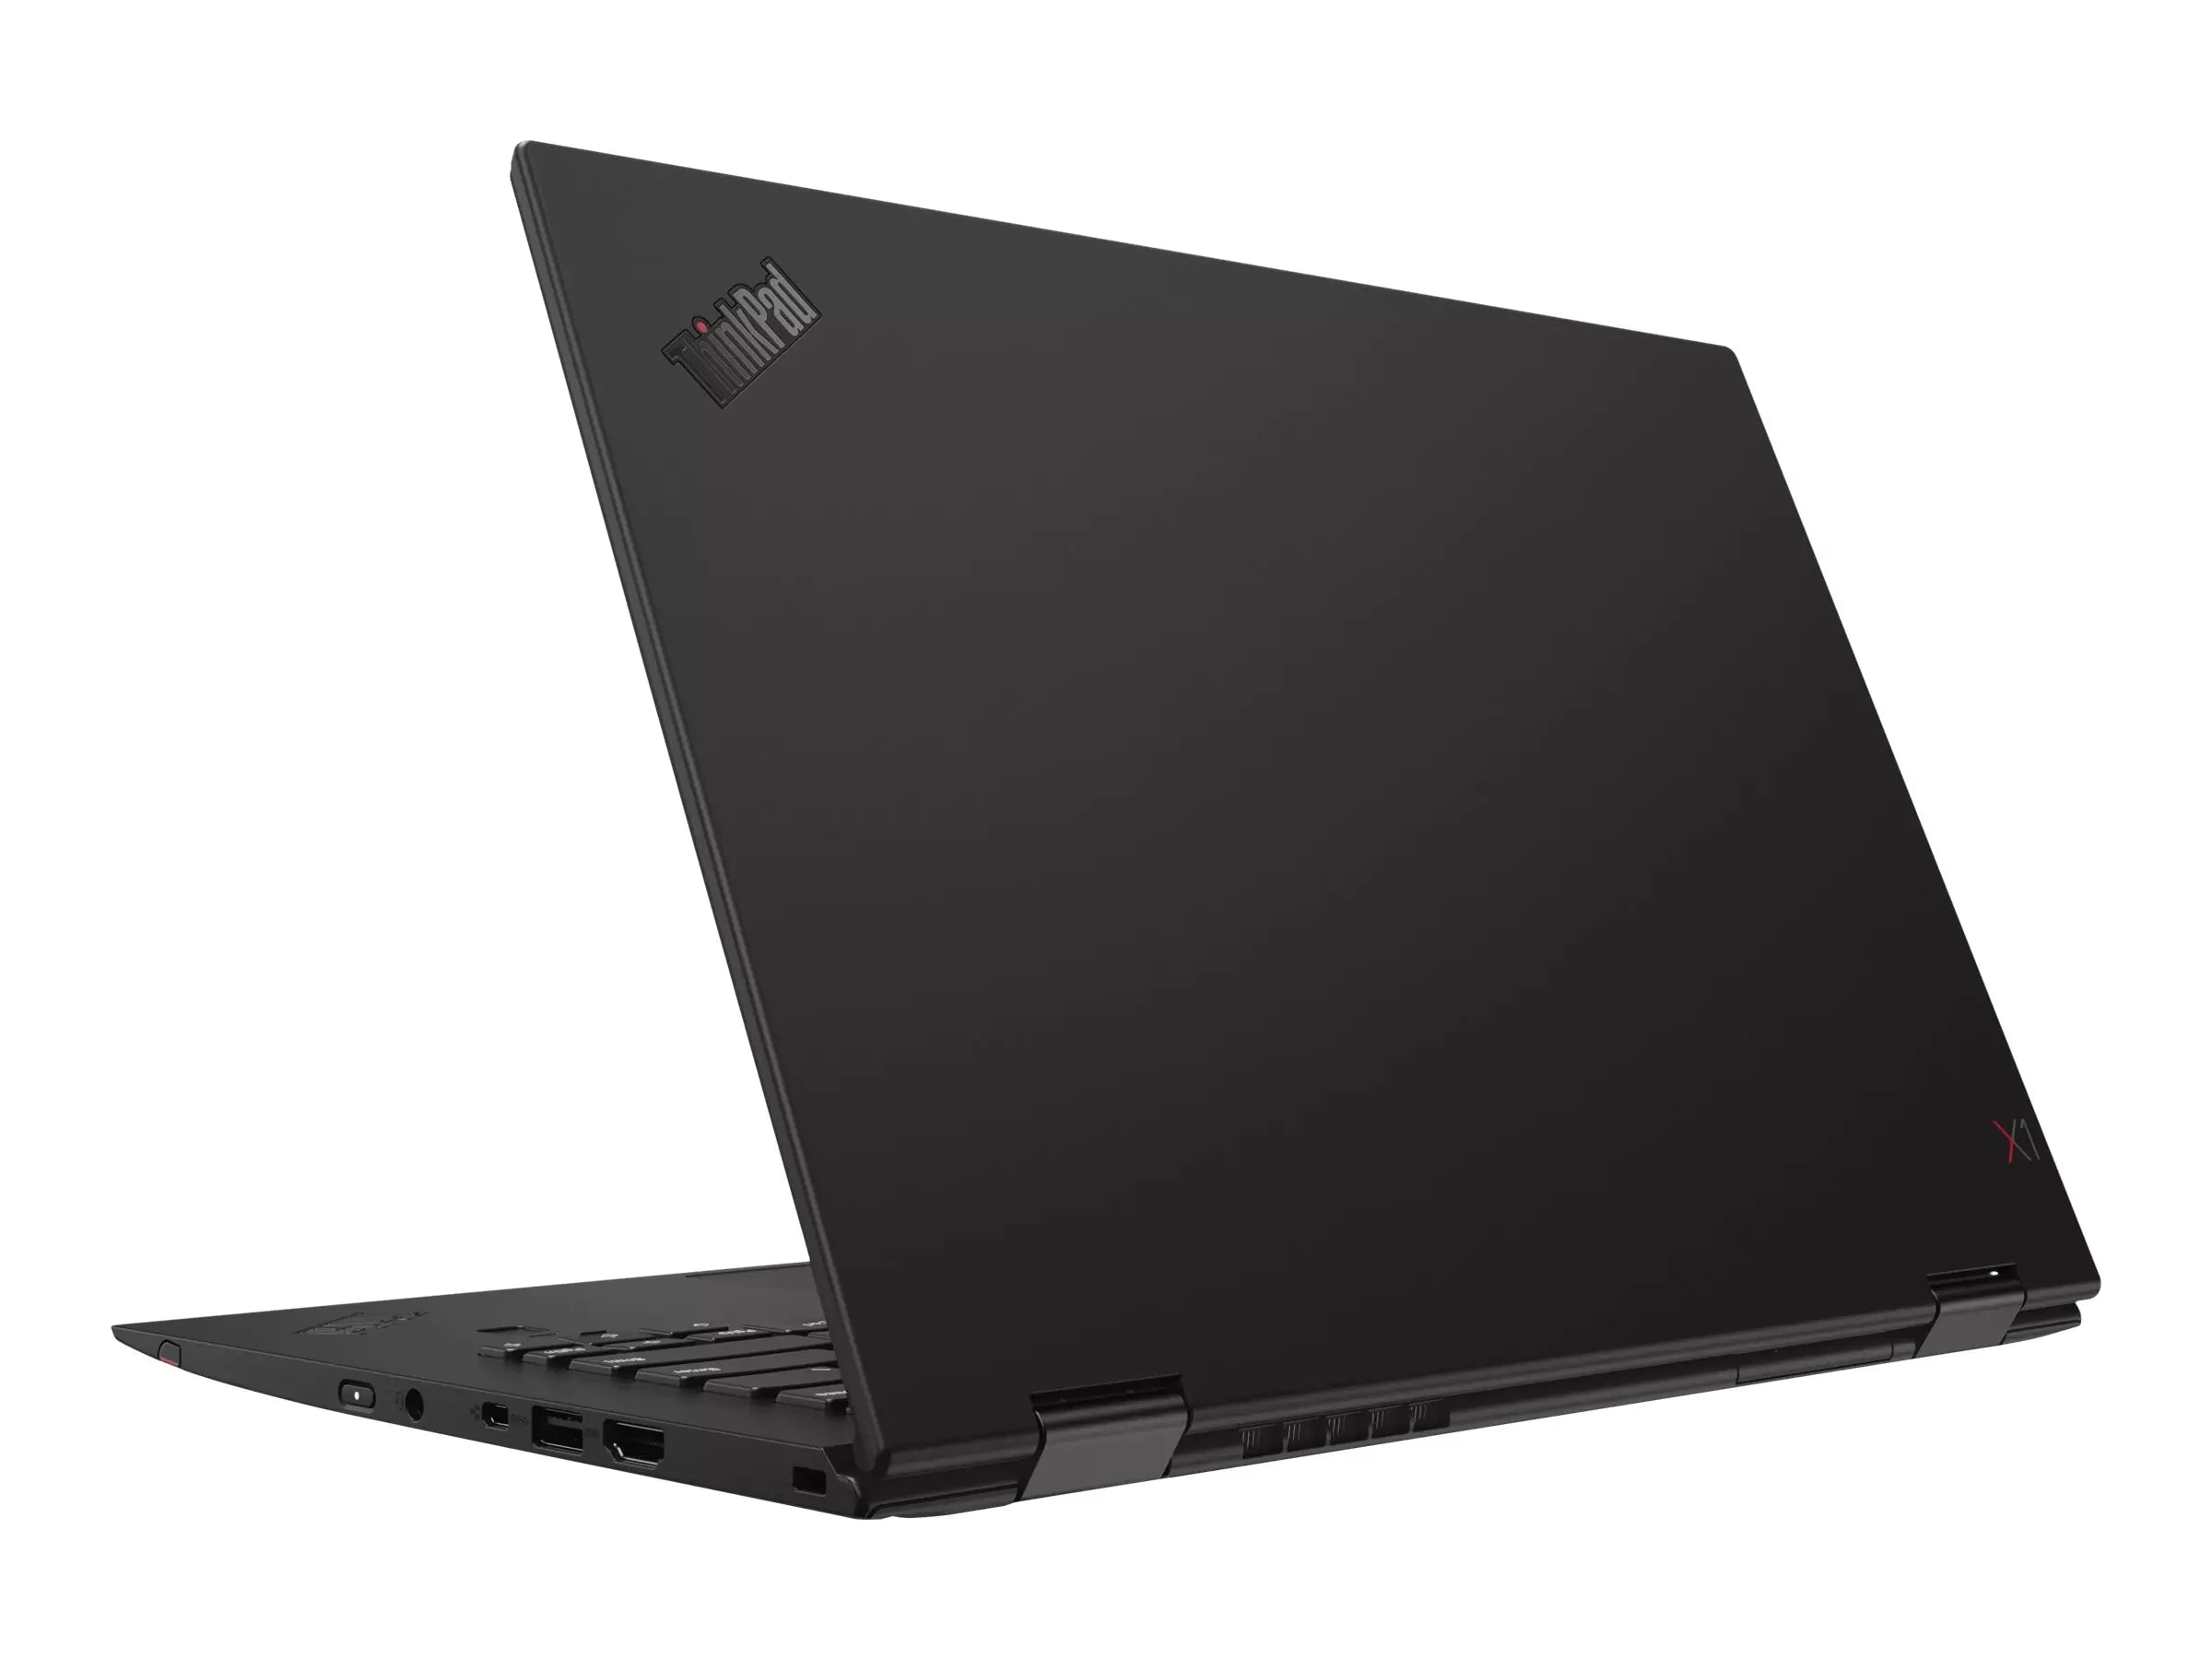 Lenovo ThinkPad X1 Yoga 2 3Gen